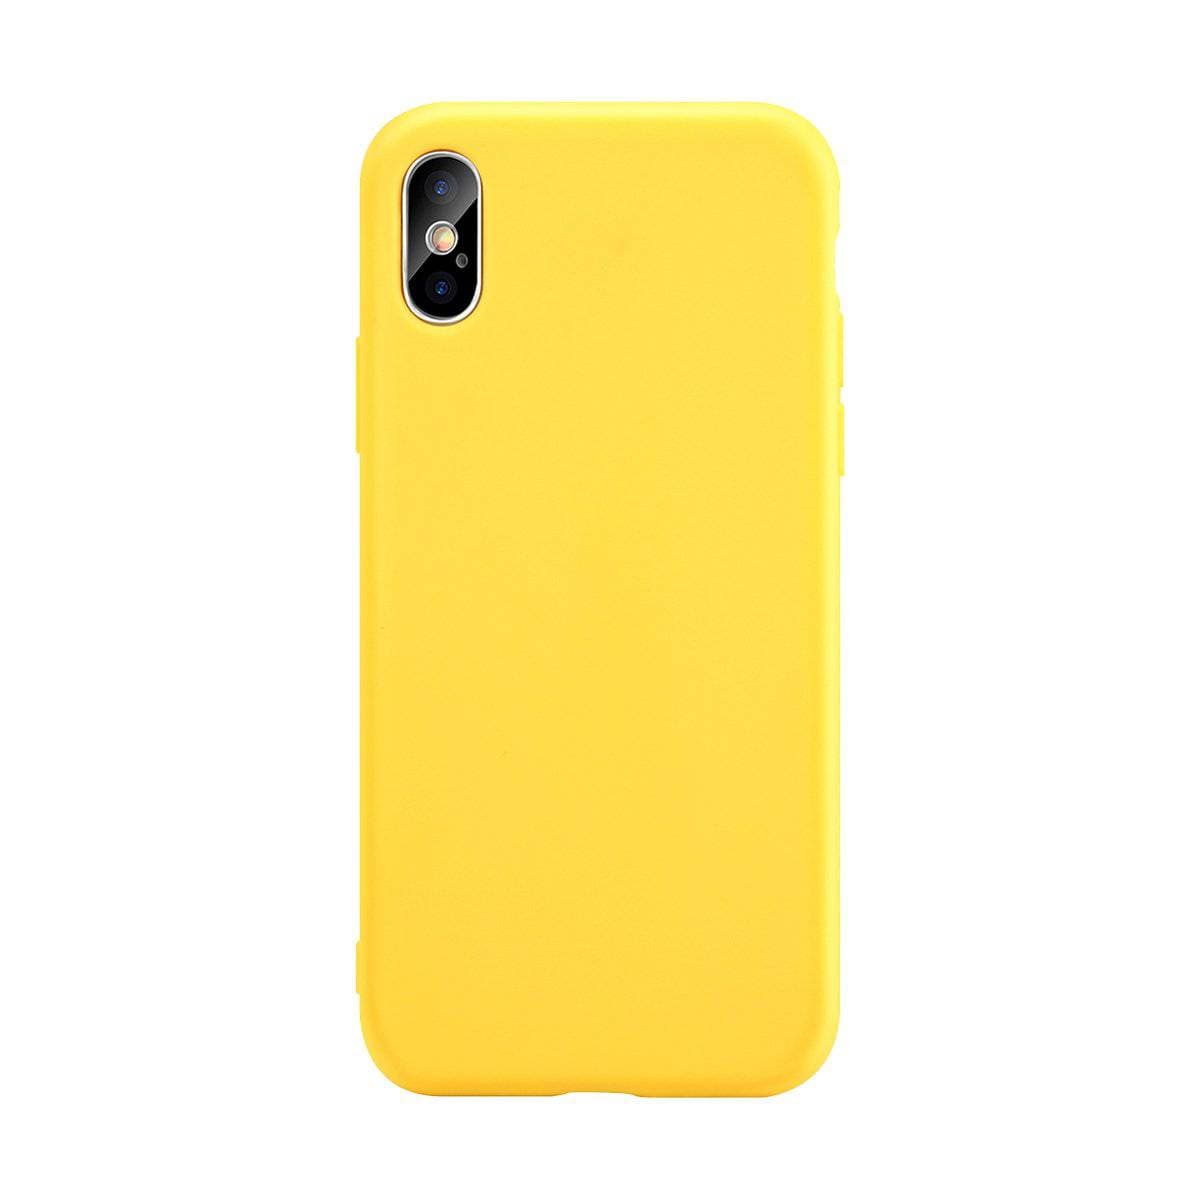 Colourful TPU protective slim simple iPhone Case - iiCase